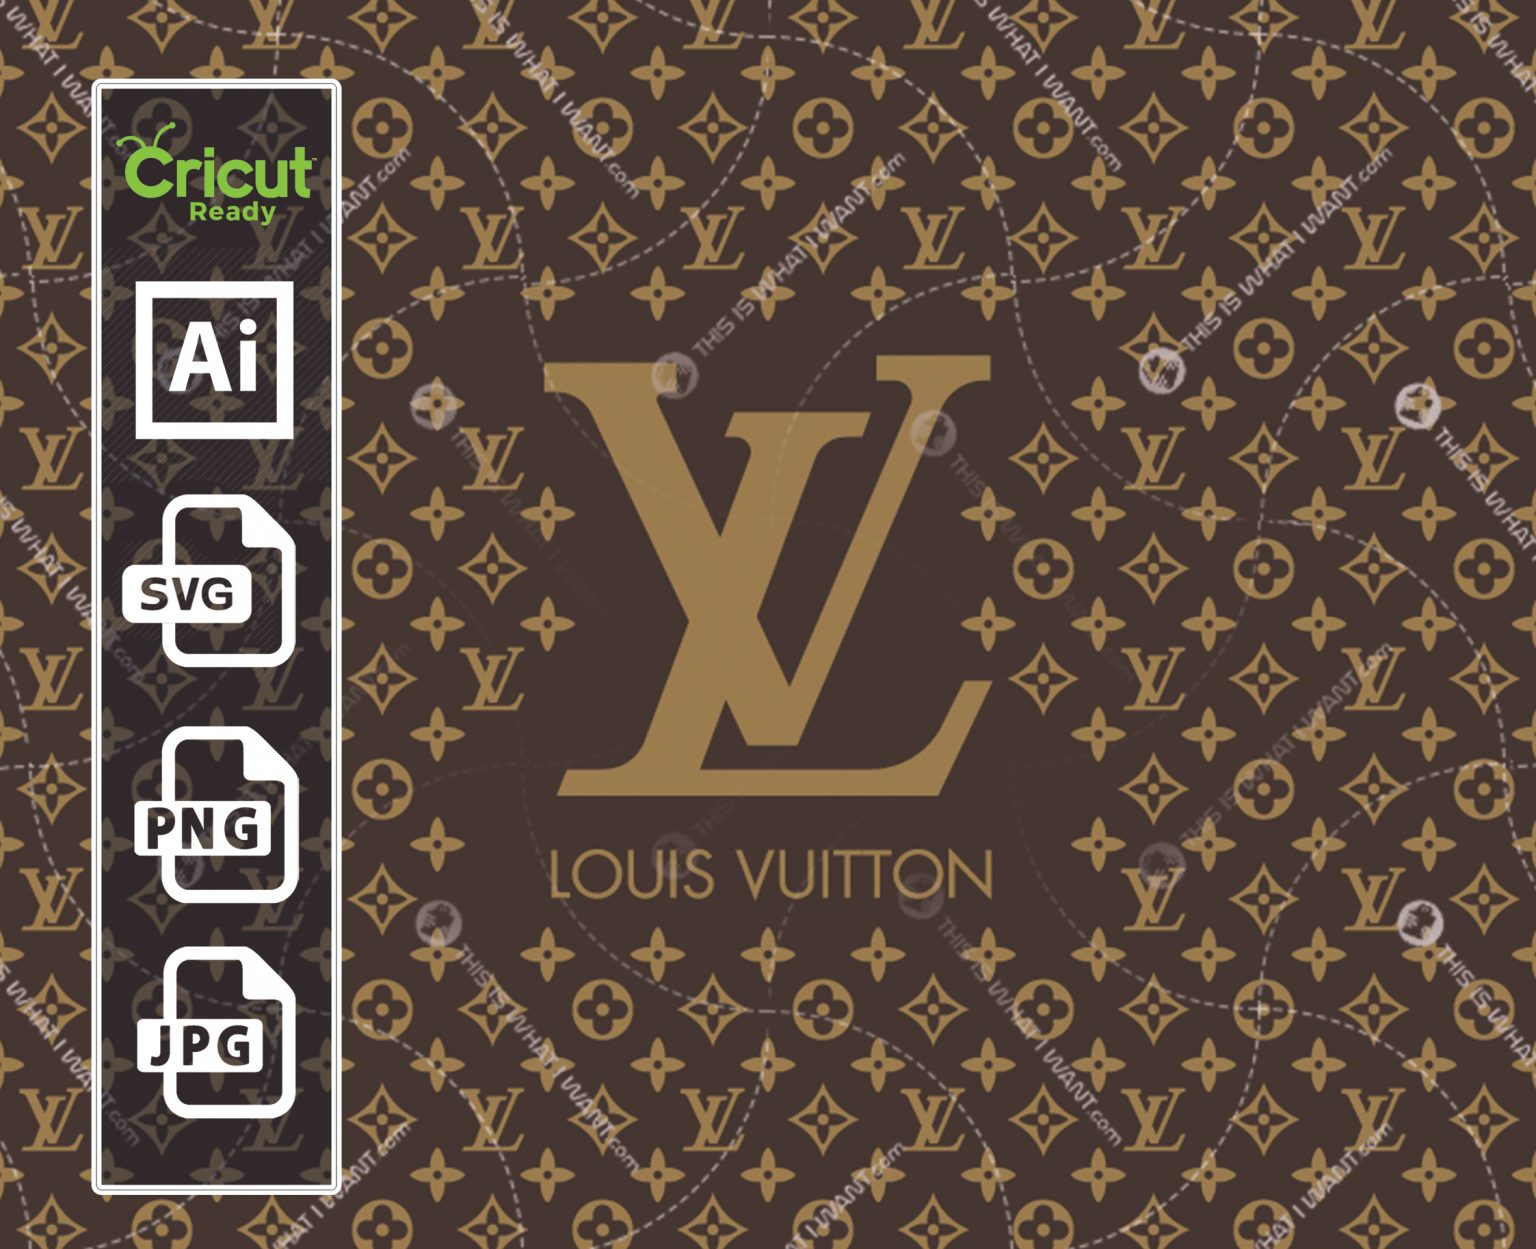 Louis Vuitton Logo + monogram Inspired - Vector Art Design - Hi Quality